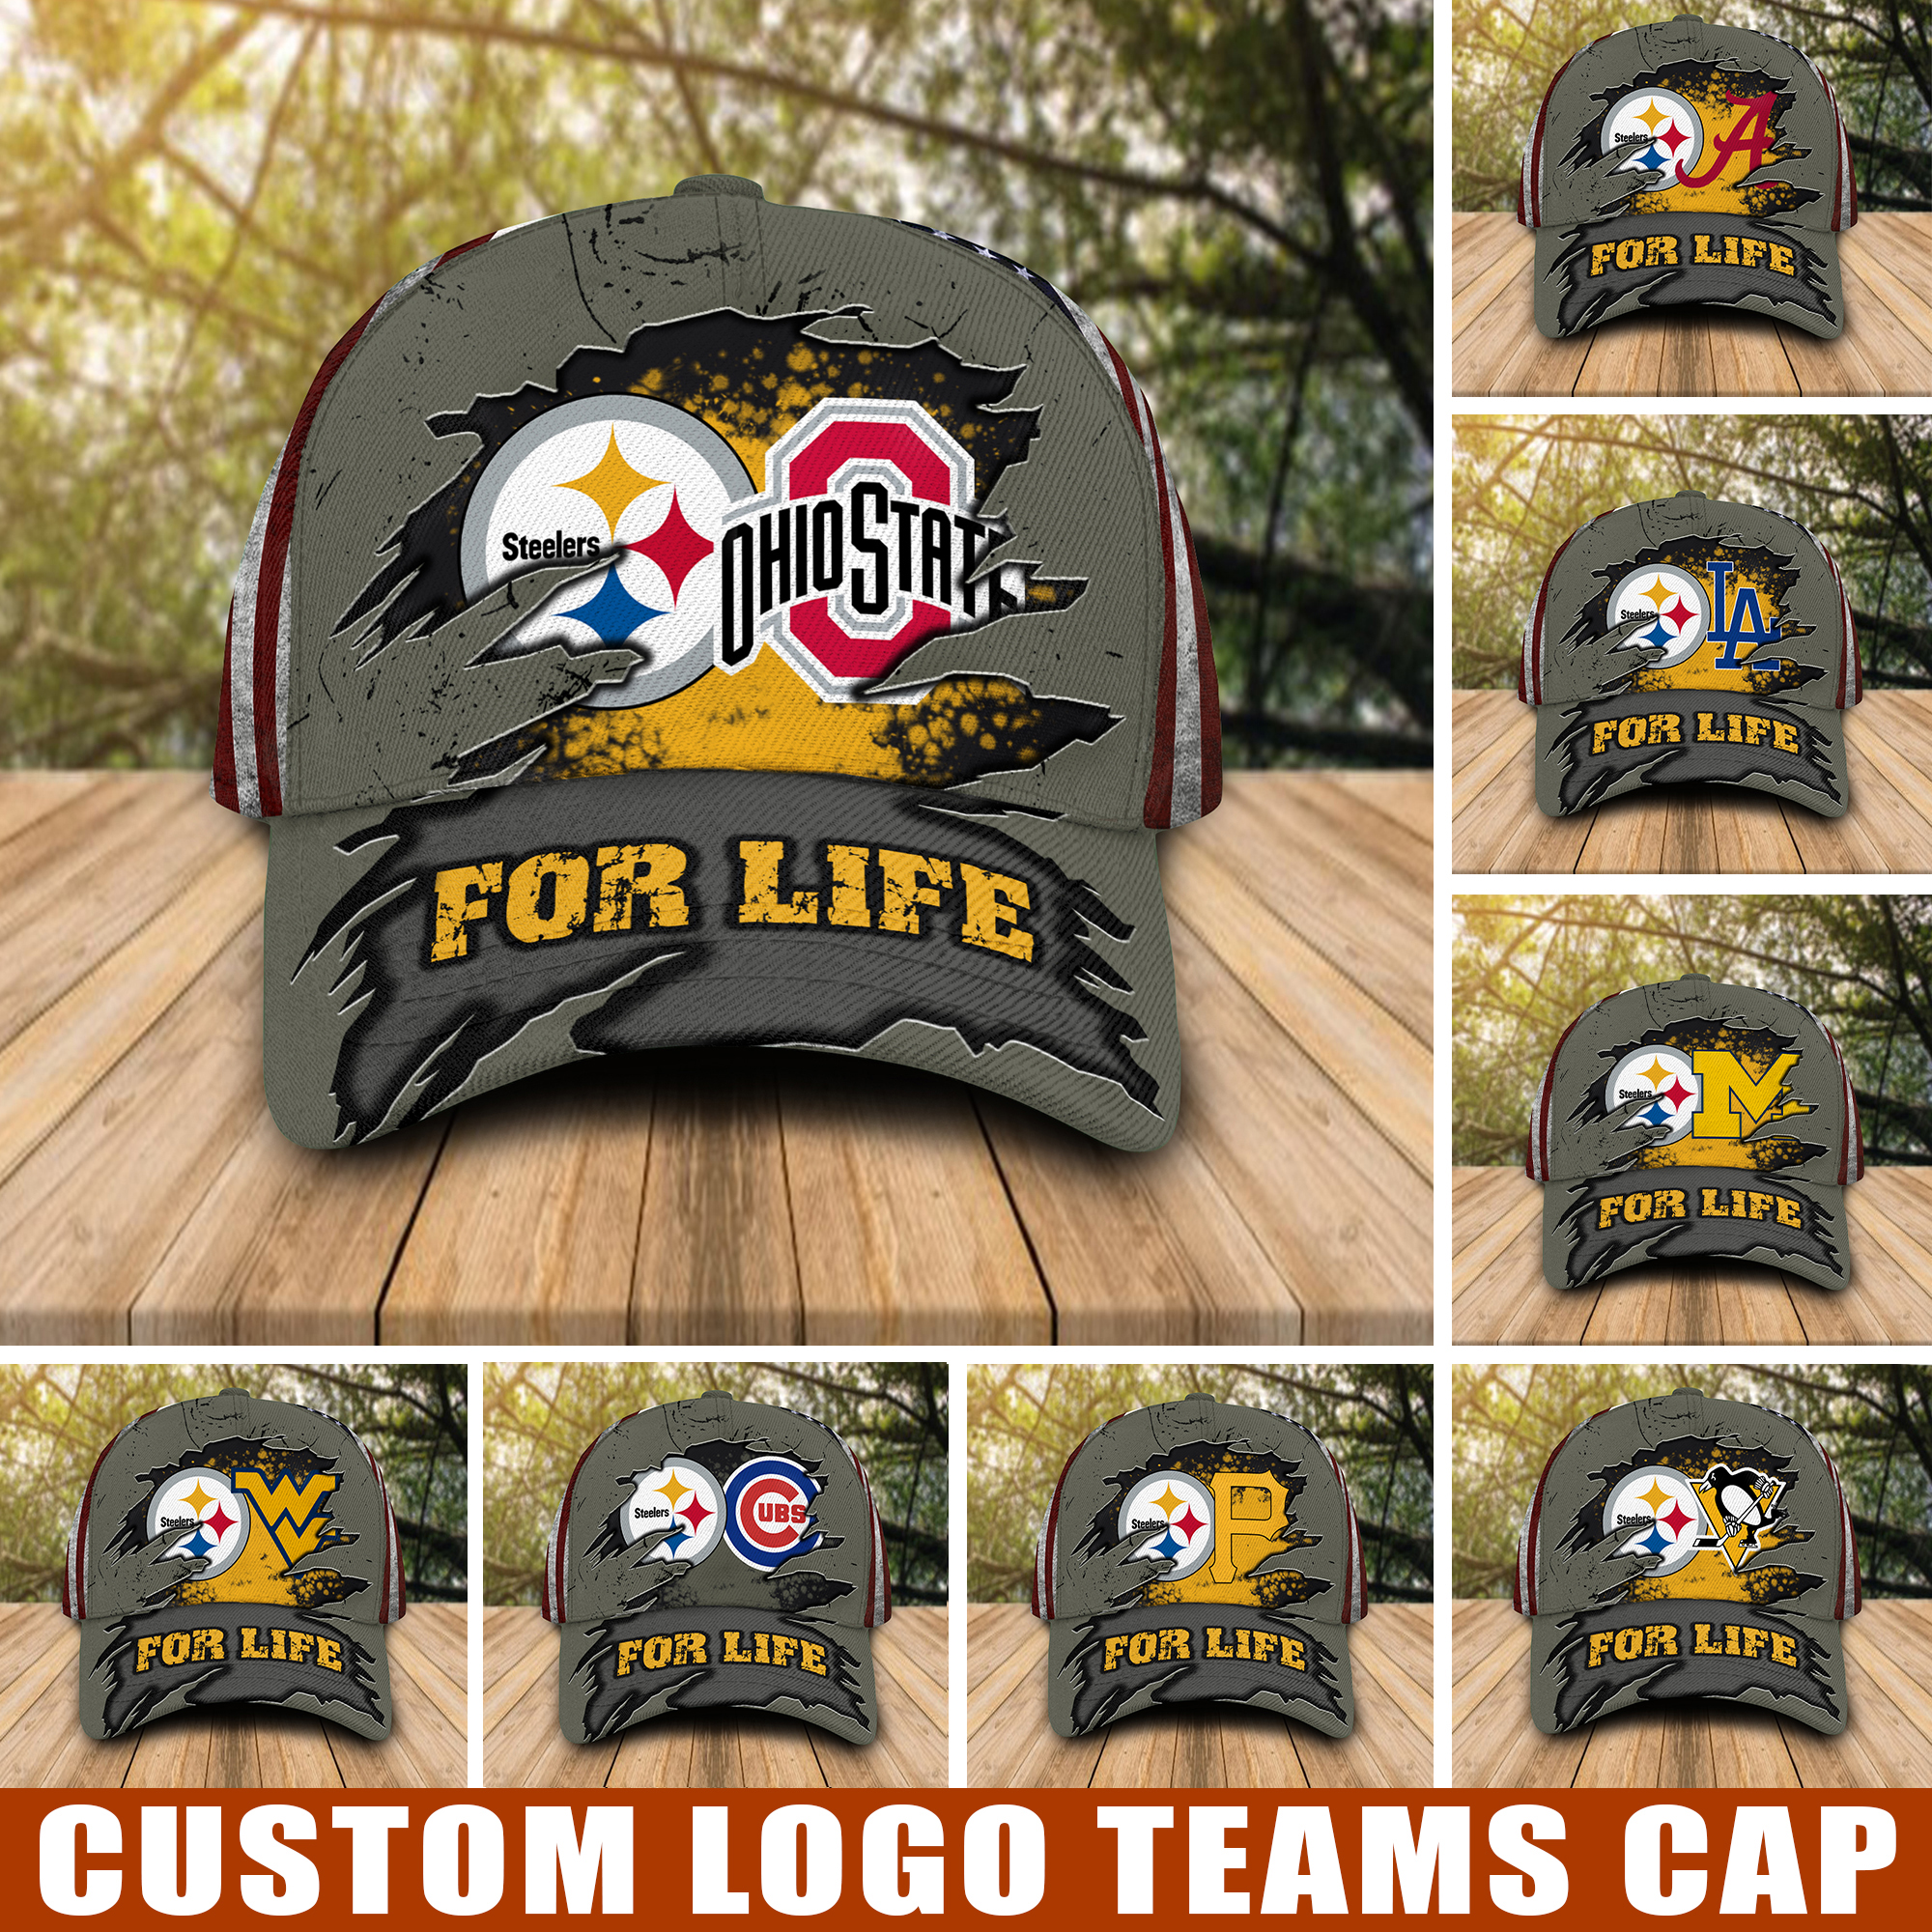 Pittsburgh Steelers and Custom logo Sport teams For Life Cap – Saleoff 121121